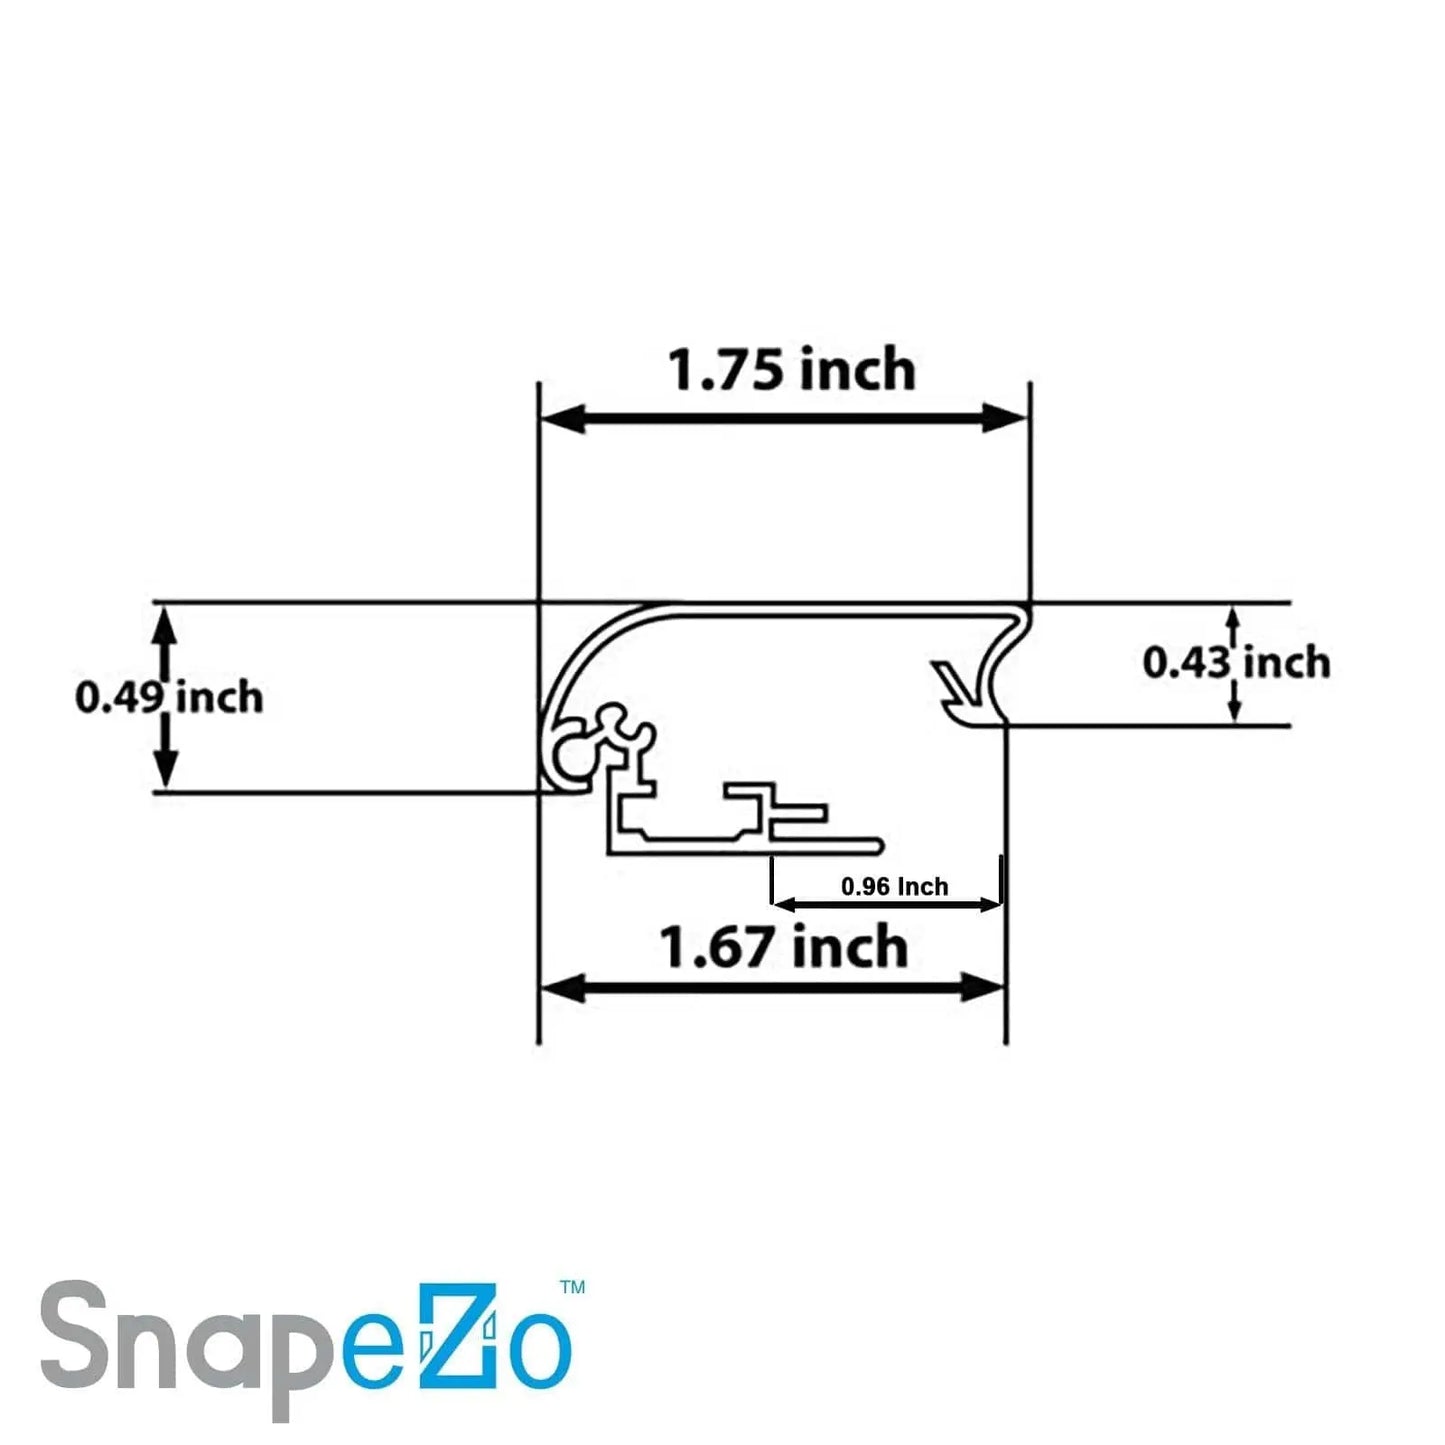 16x20 Black SnapeZo® Snap Frame - 1.7" Profile - Snap Frames Direct